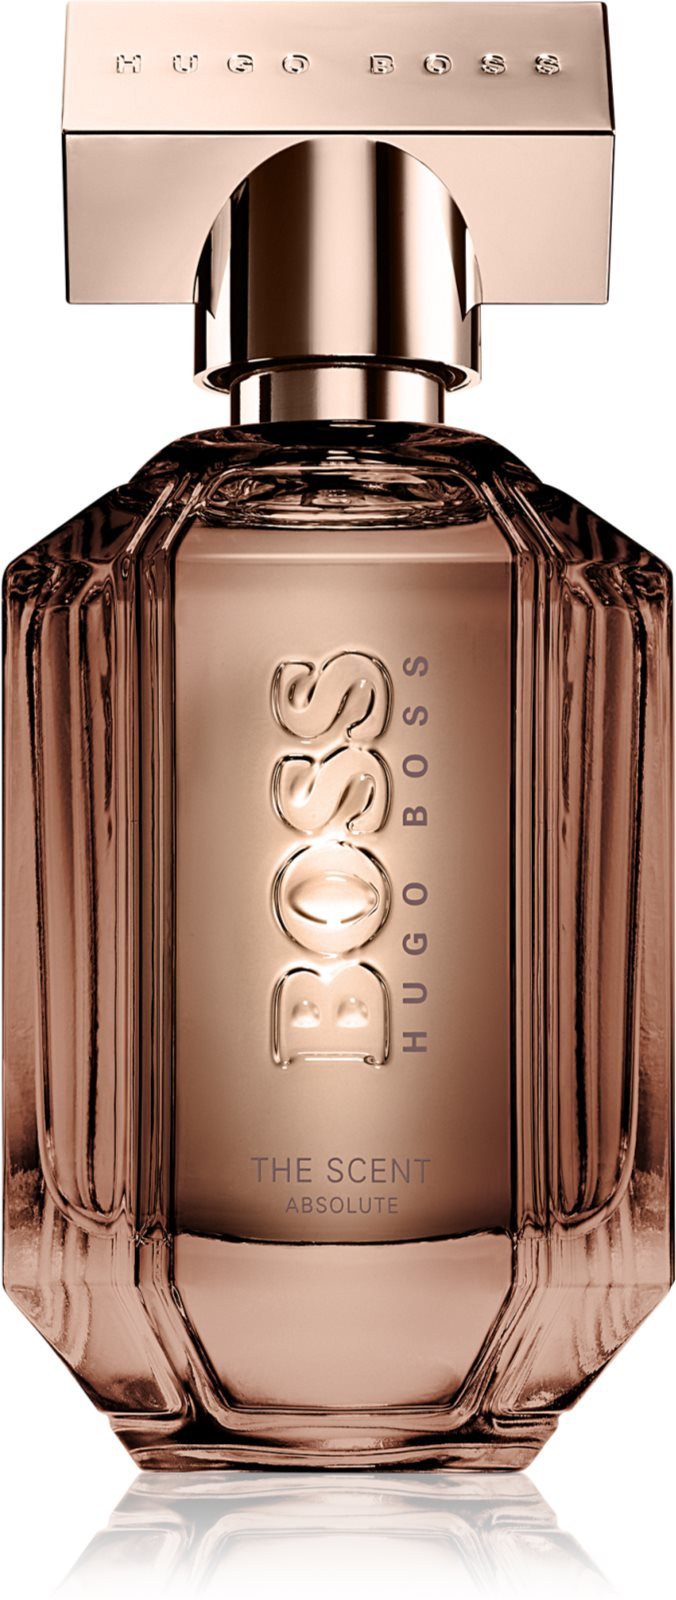 Hugo Boss The Scent Absolute For Her Eau de Parfum 30ml